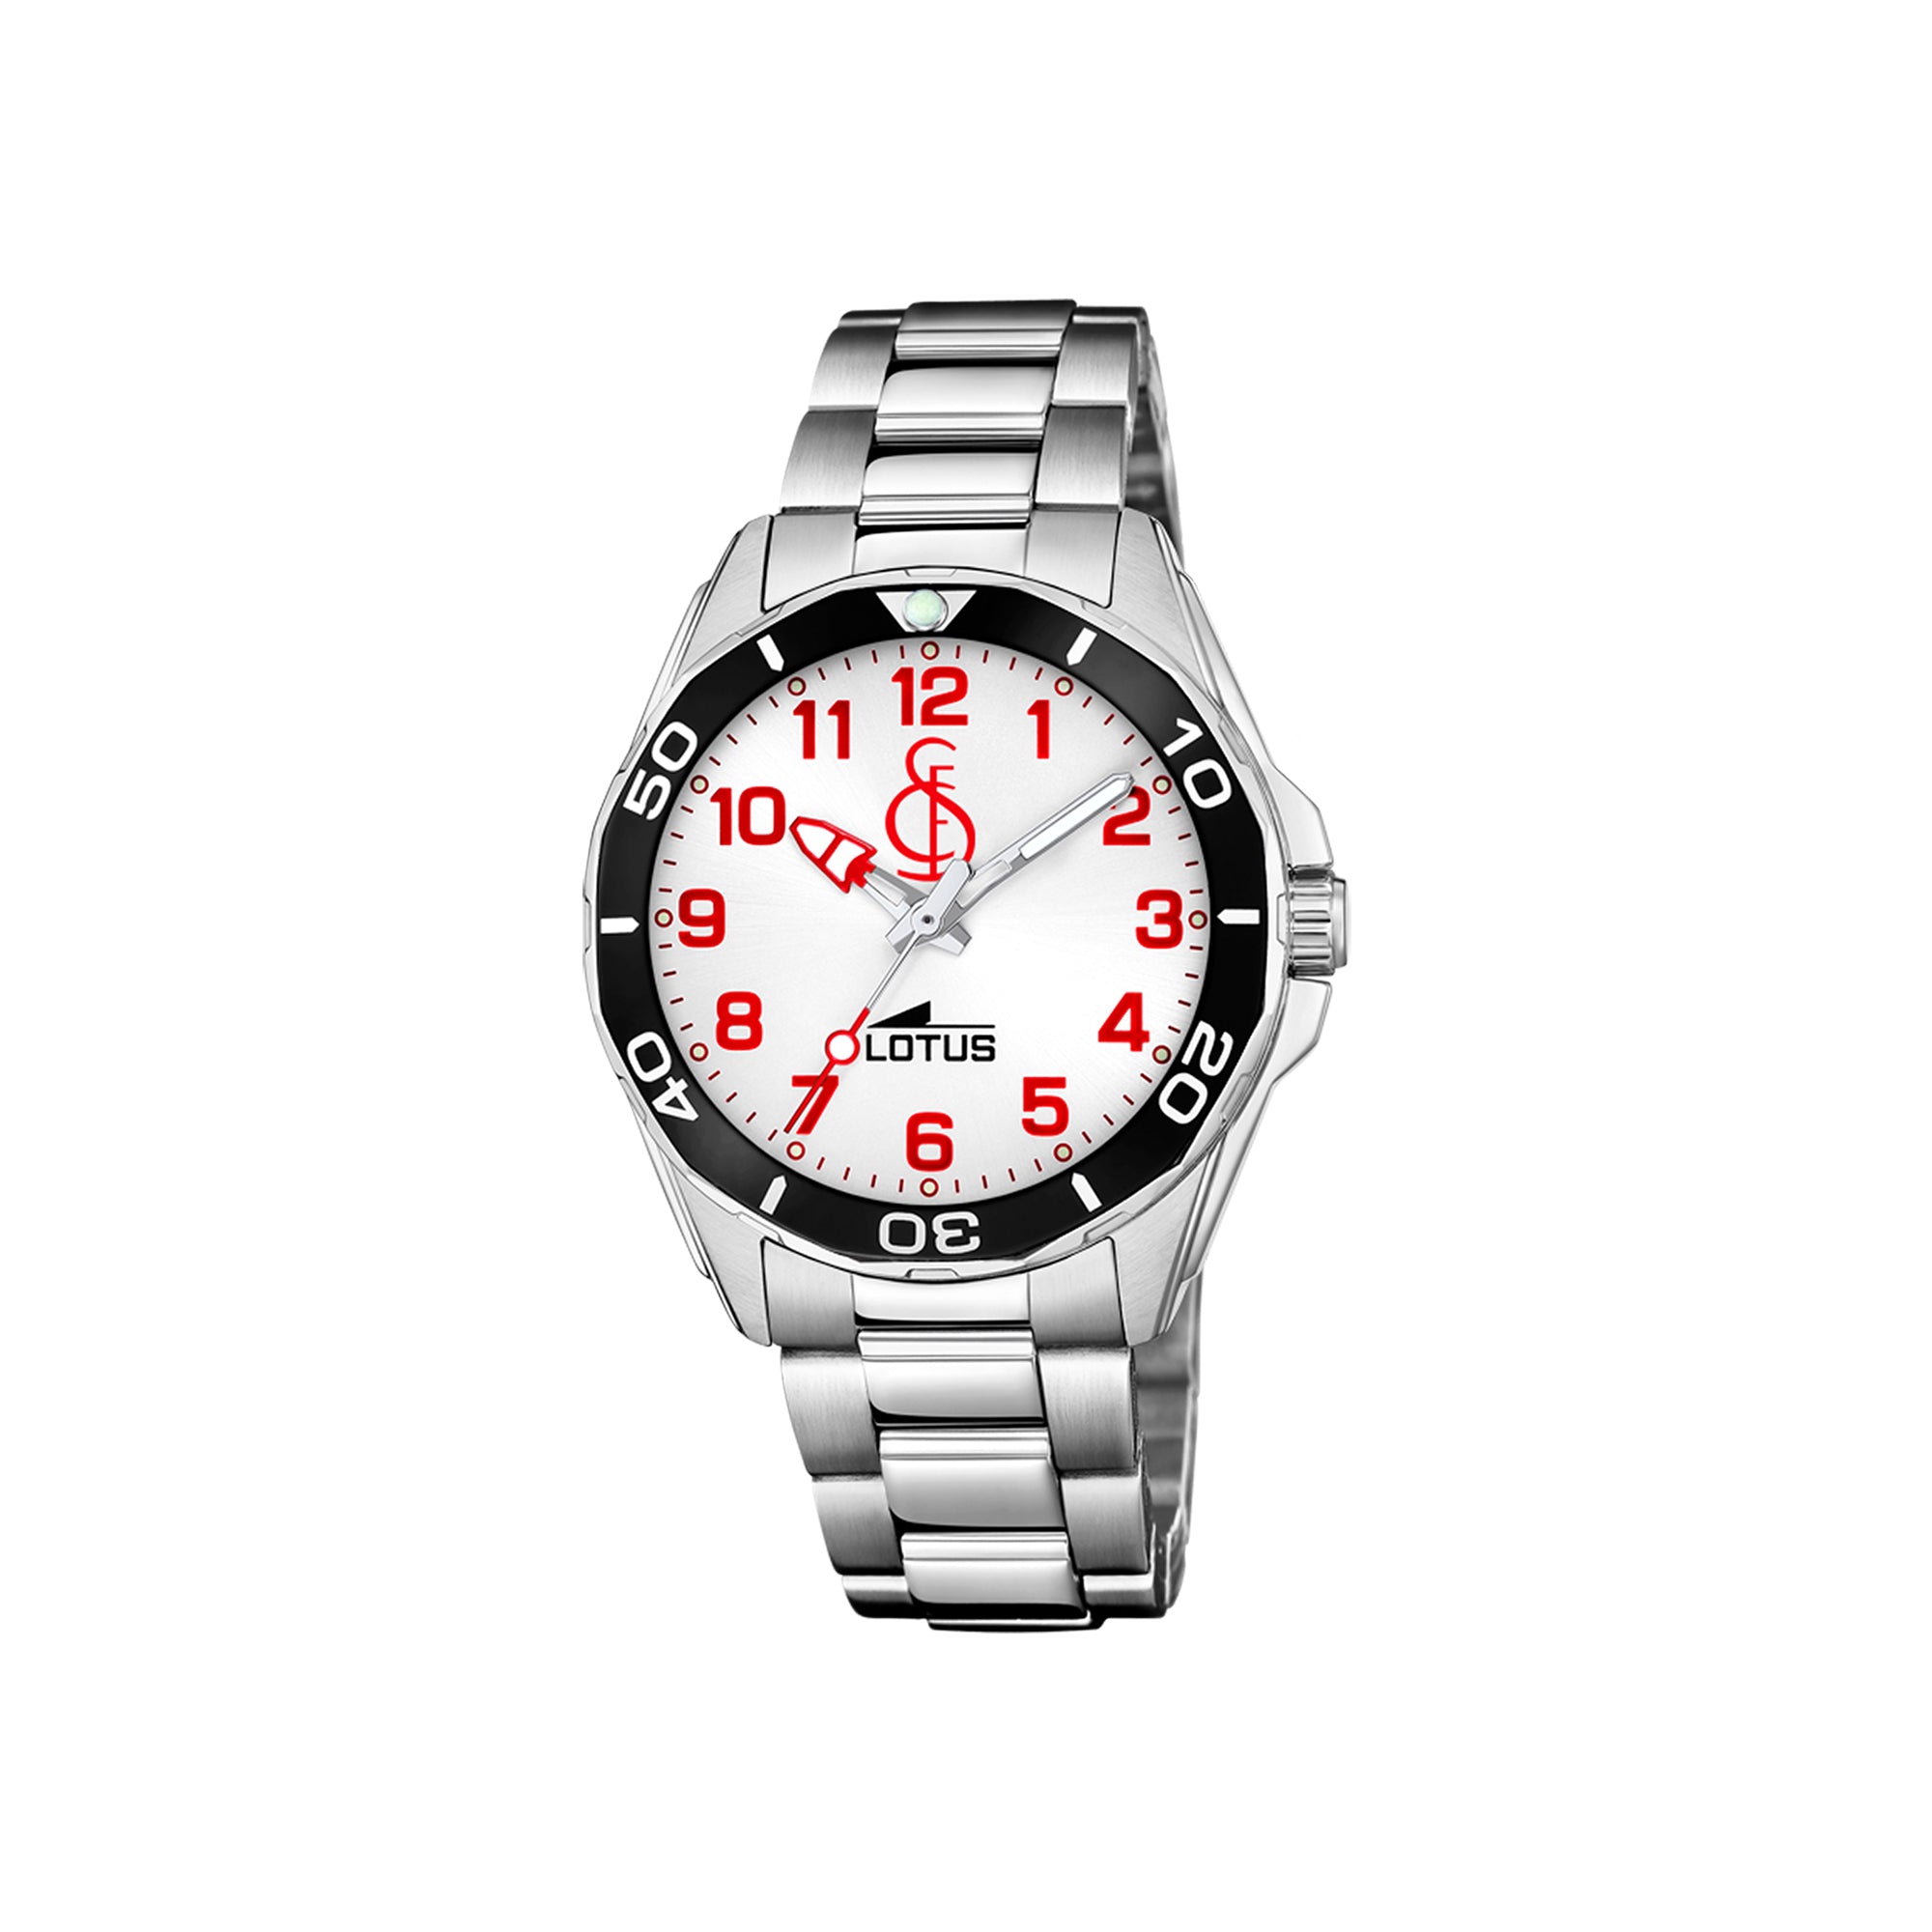 Cadet / women's  white dial watch